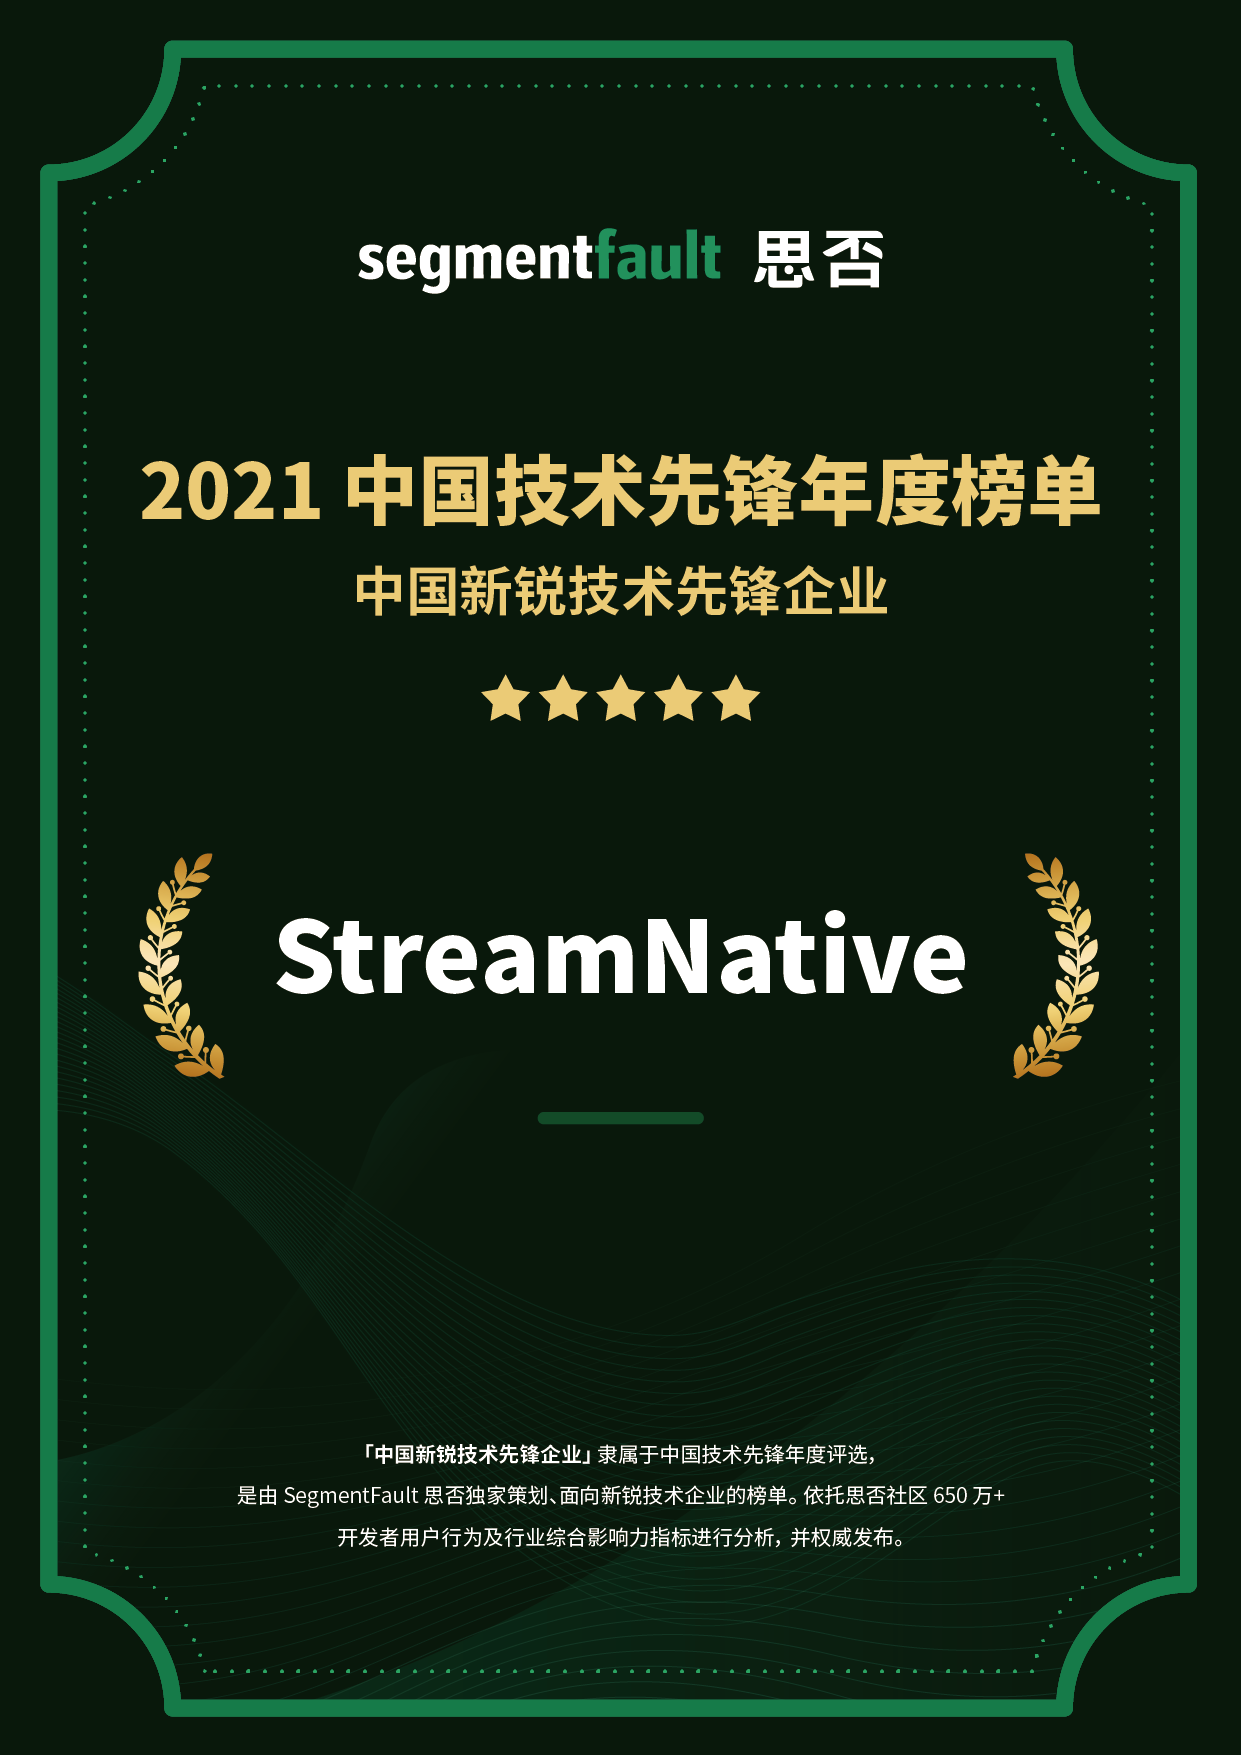 StreamNative 入选 2021 segmentfault 中国新锐技术先锋企业